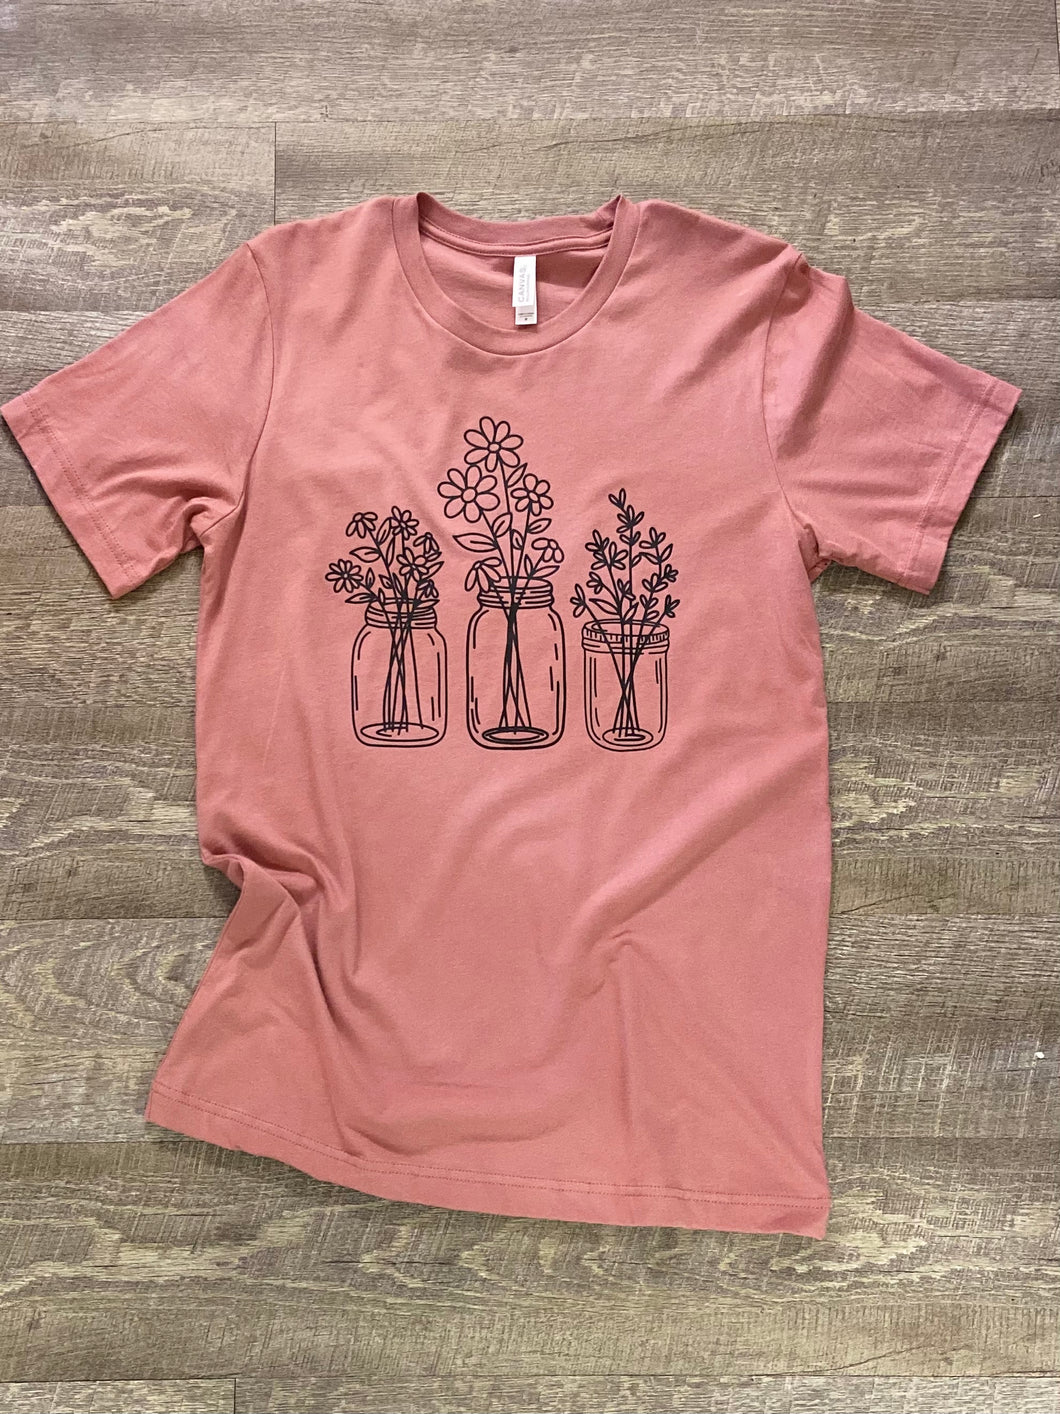 Floral Mason Jar Tee Shirt